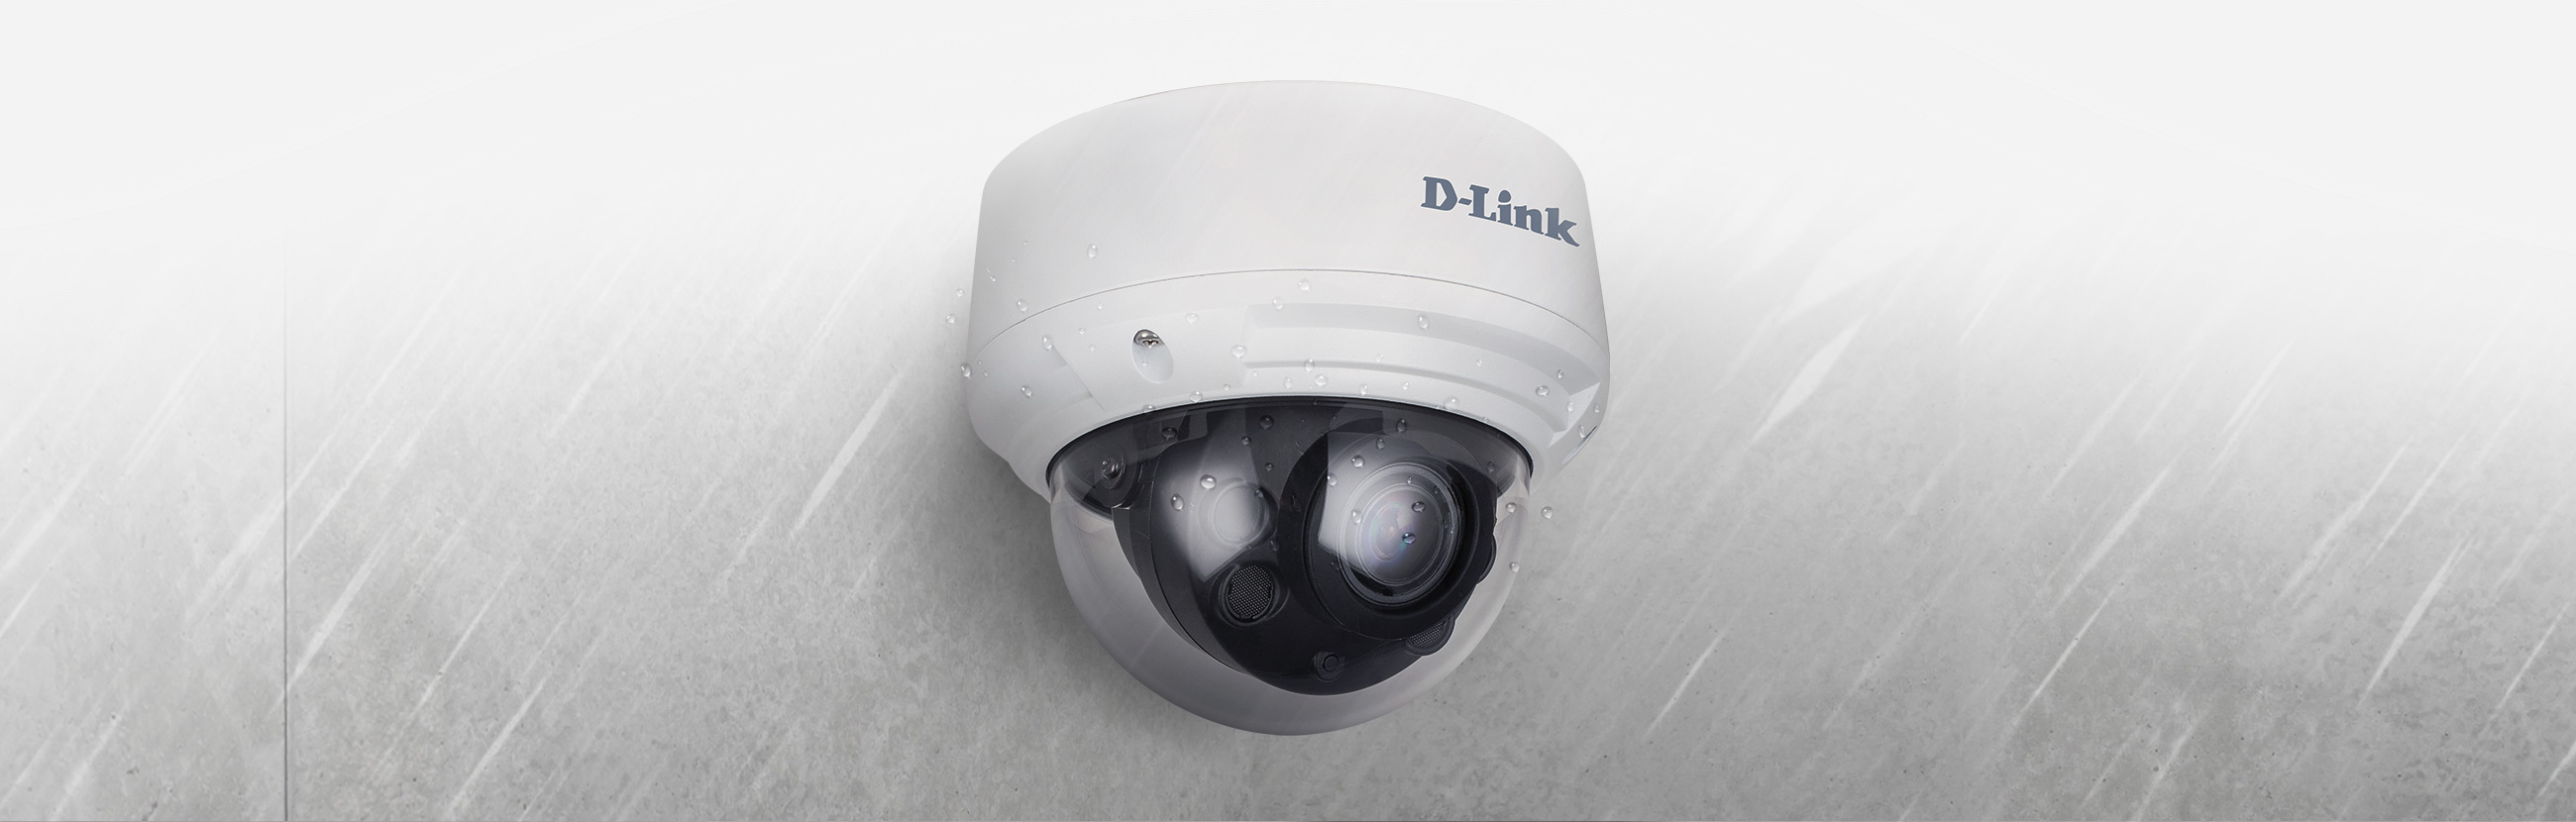 DCS-4614EK Vigilance 4 Megapixel H.265 Outdoor Dome Camera mounted outdoors in the rain.